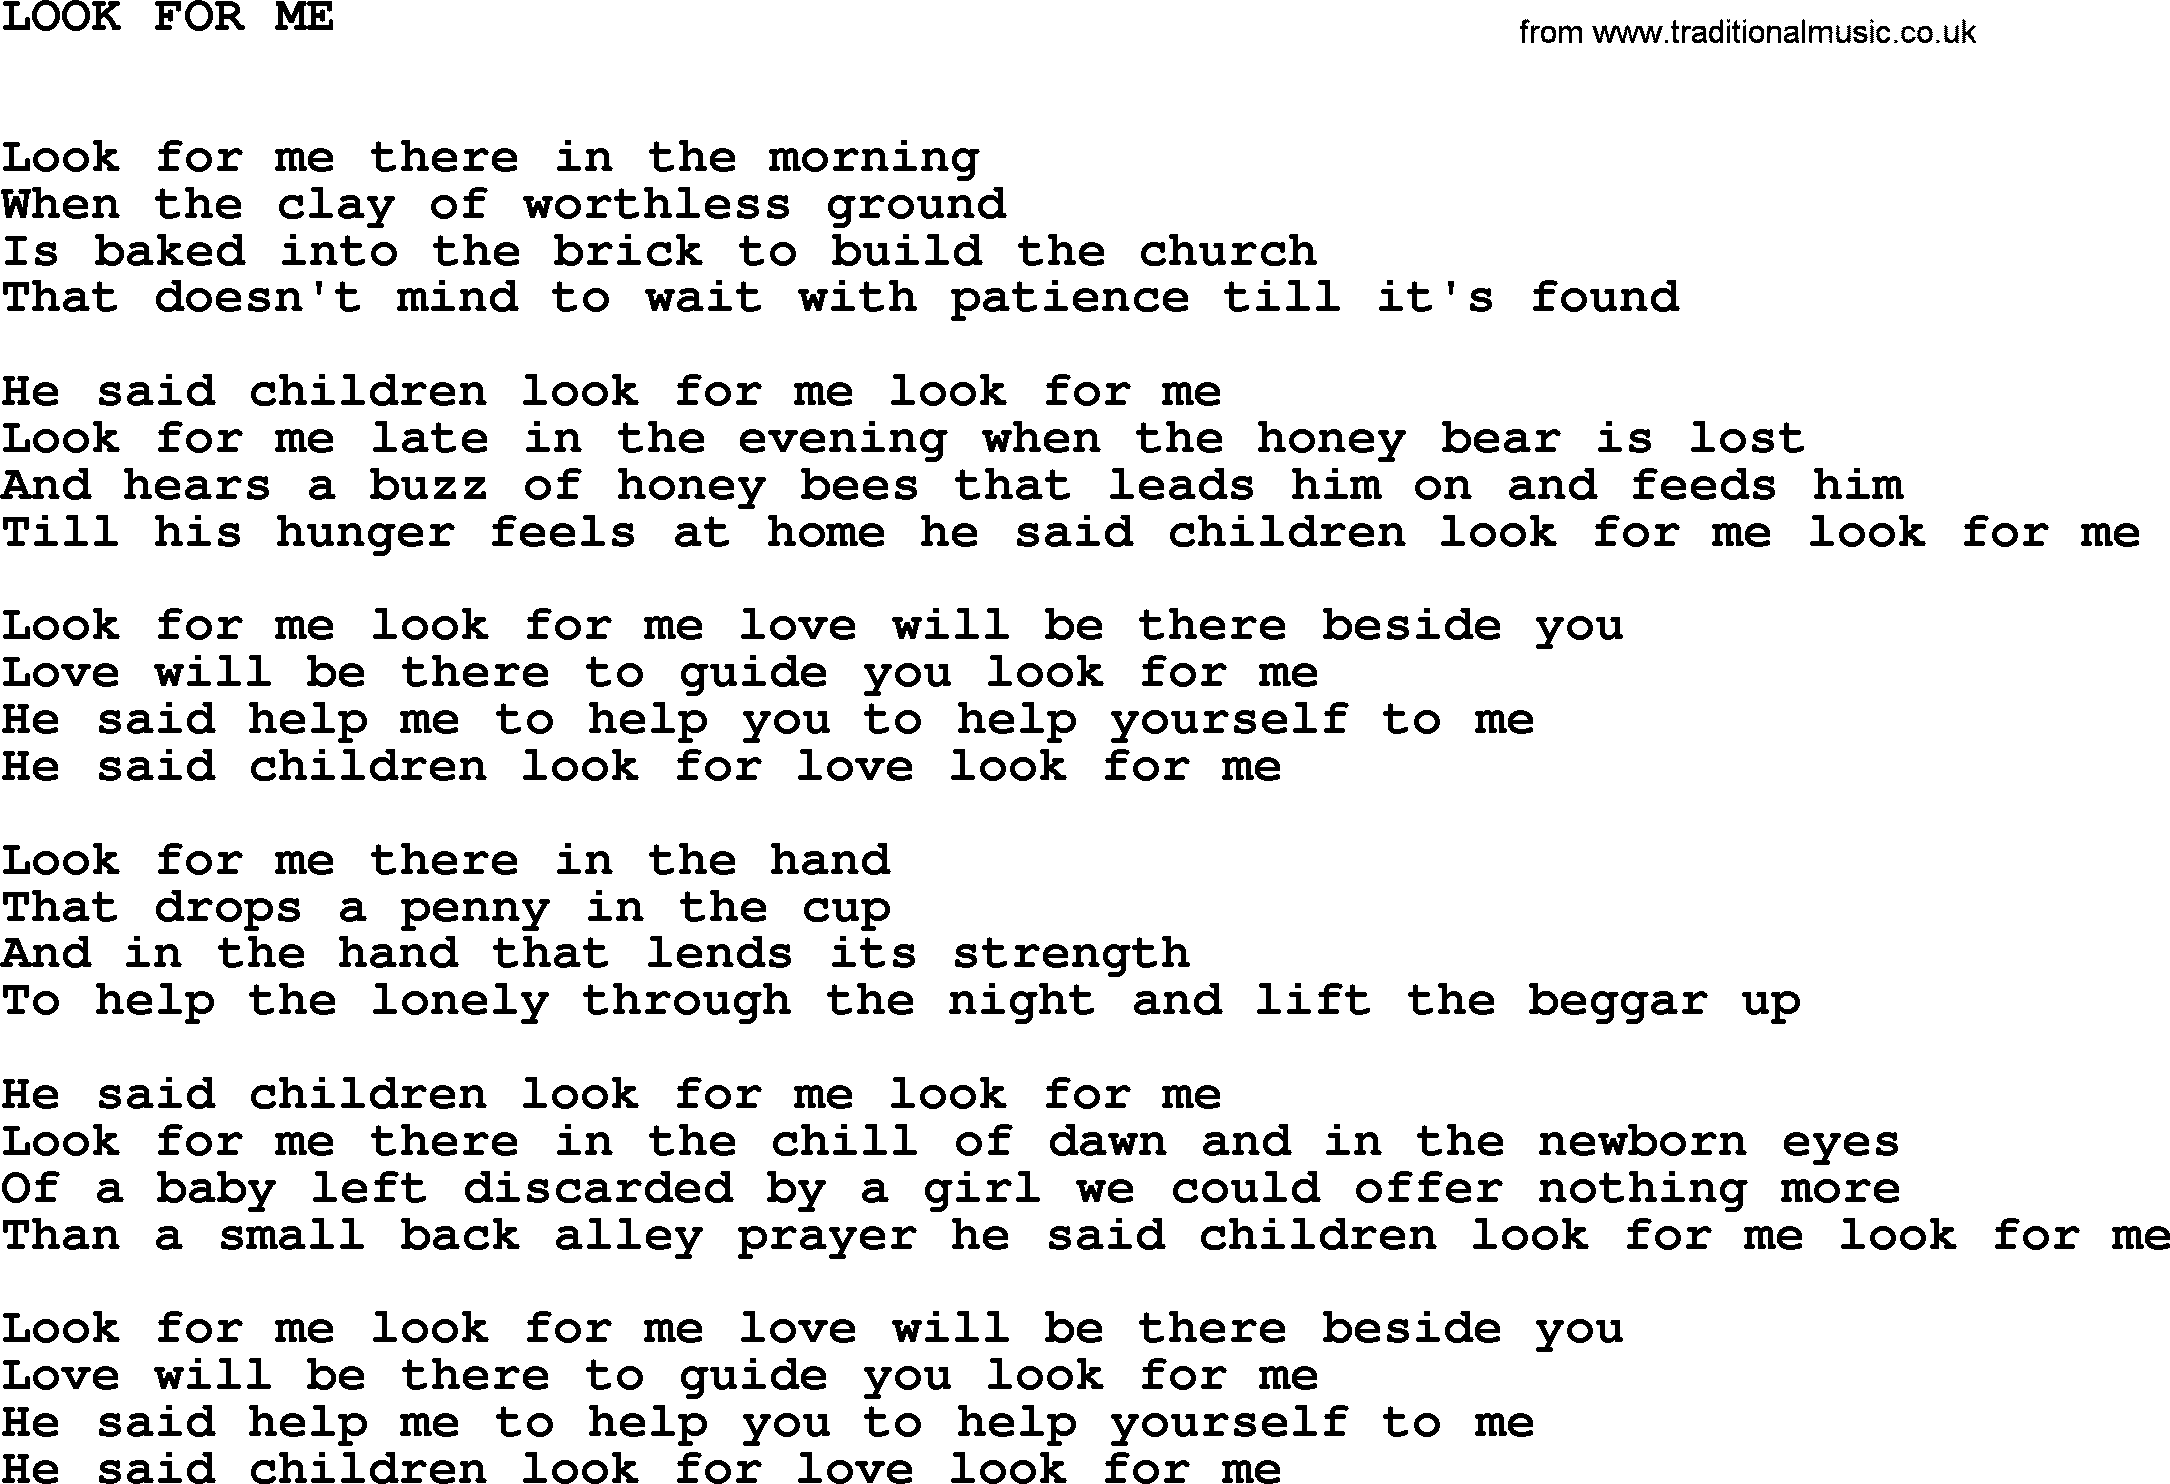 Johnny Cash song Look For Me.txt lyrics